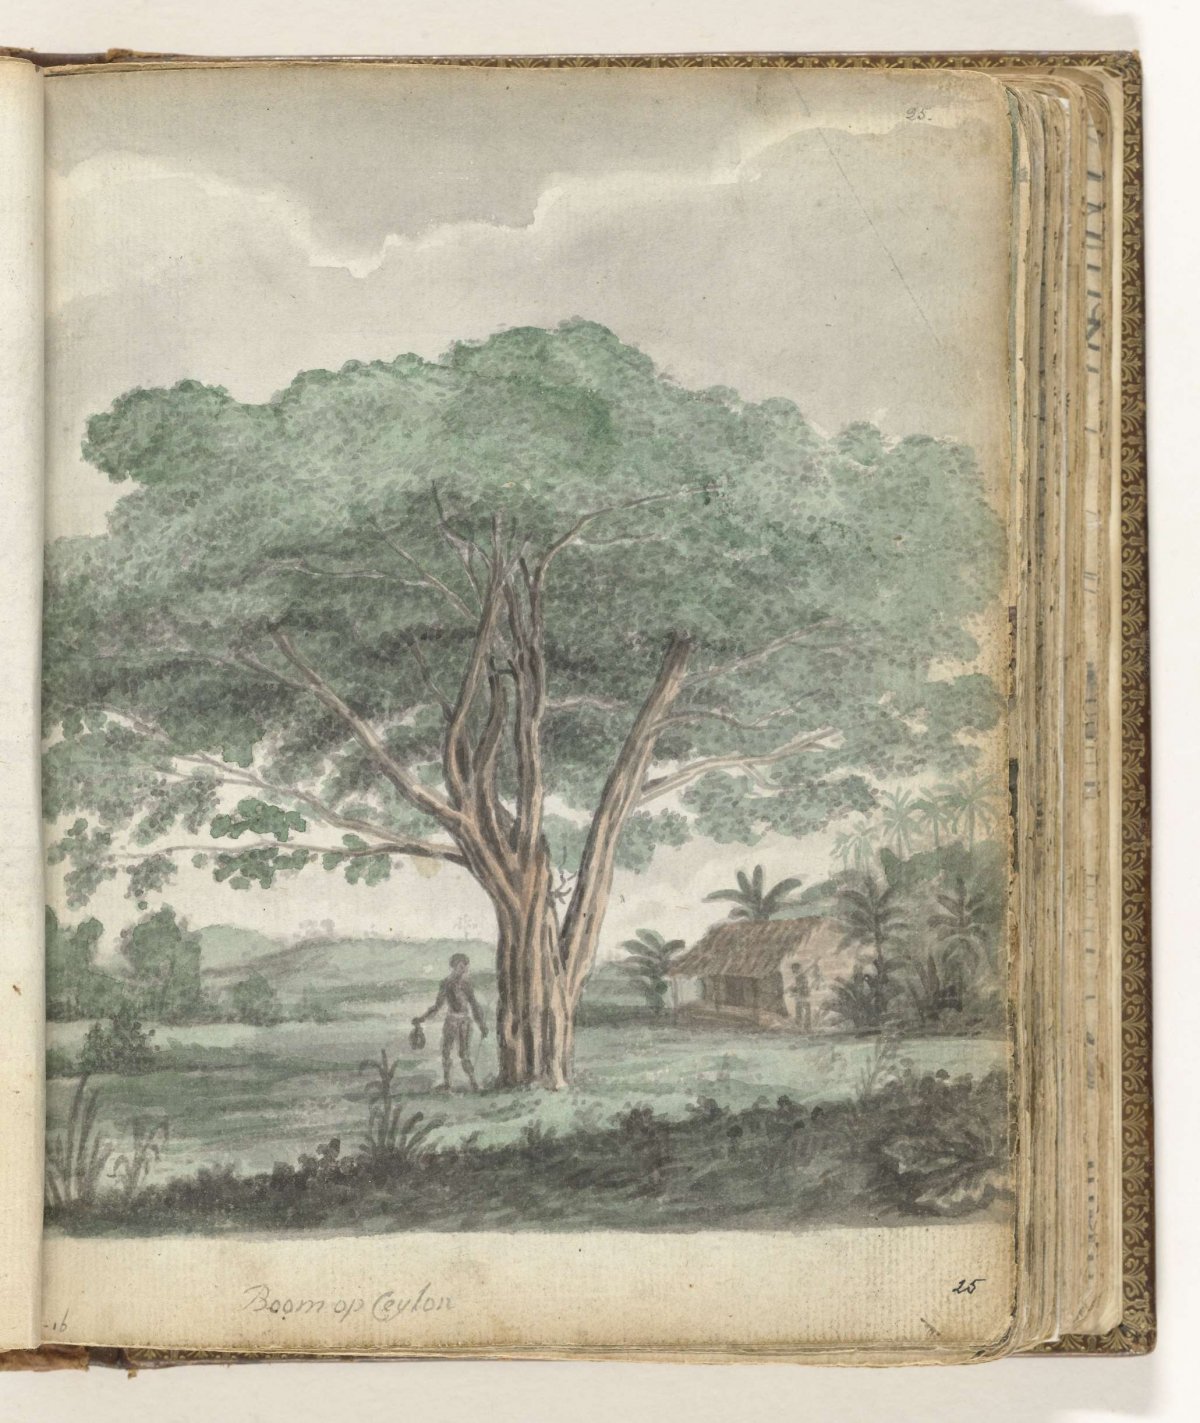 Tree on Ceylon, Jan Brandes, 1785 - 1786